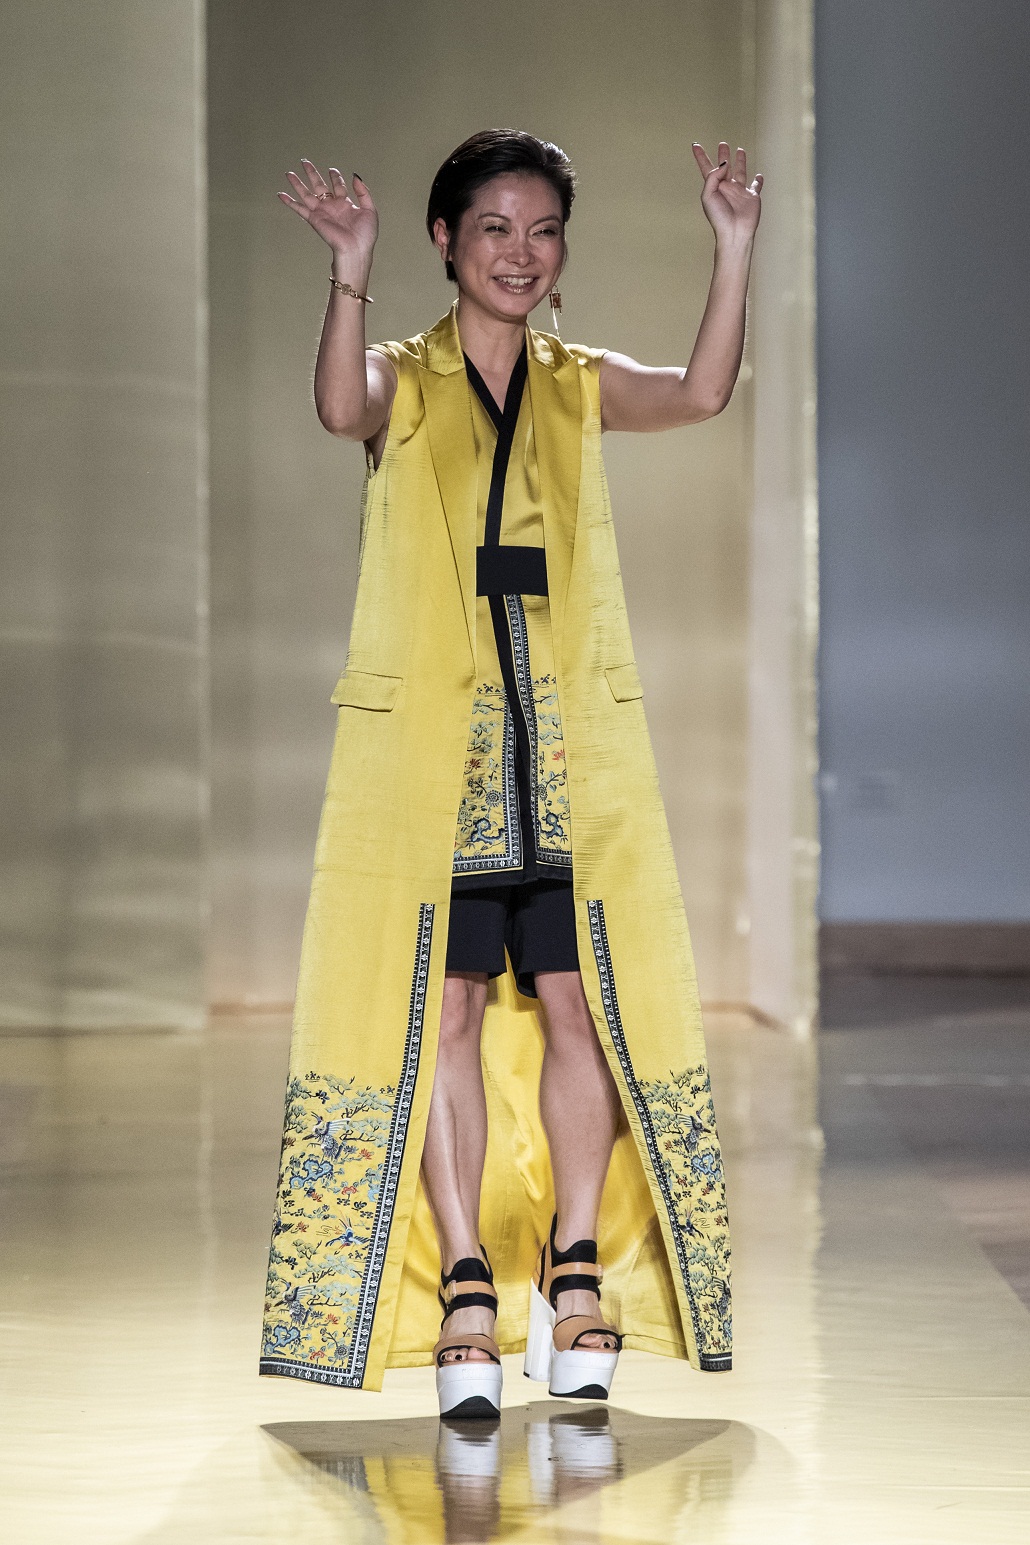 Designer Hui Zhou Zhao to support Milan during Covid19